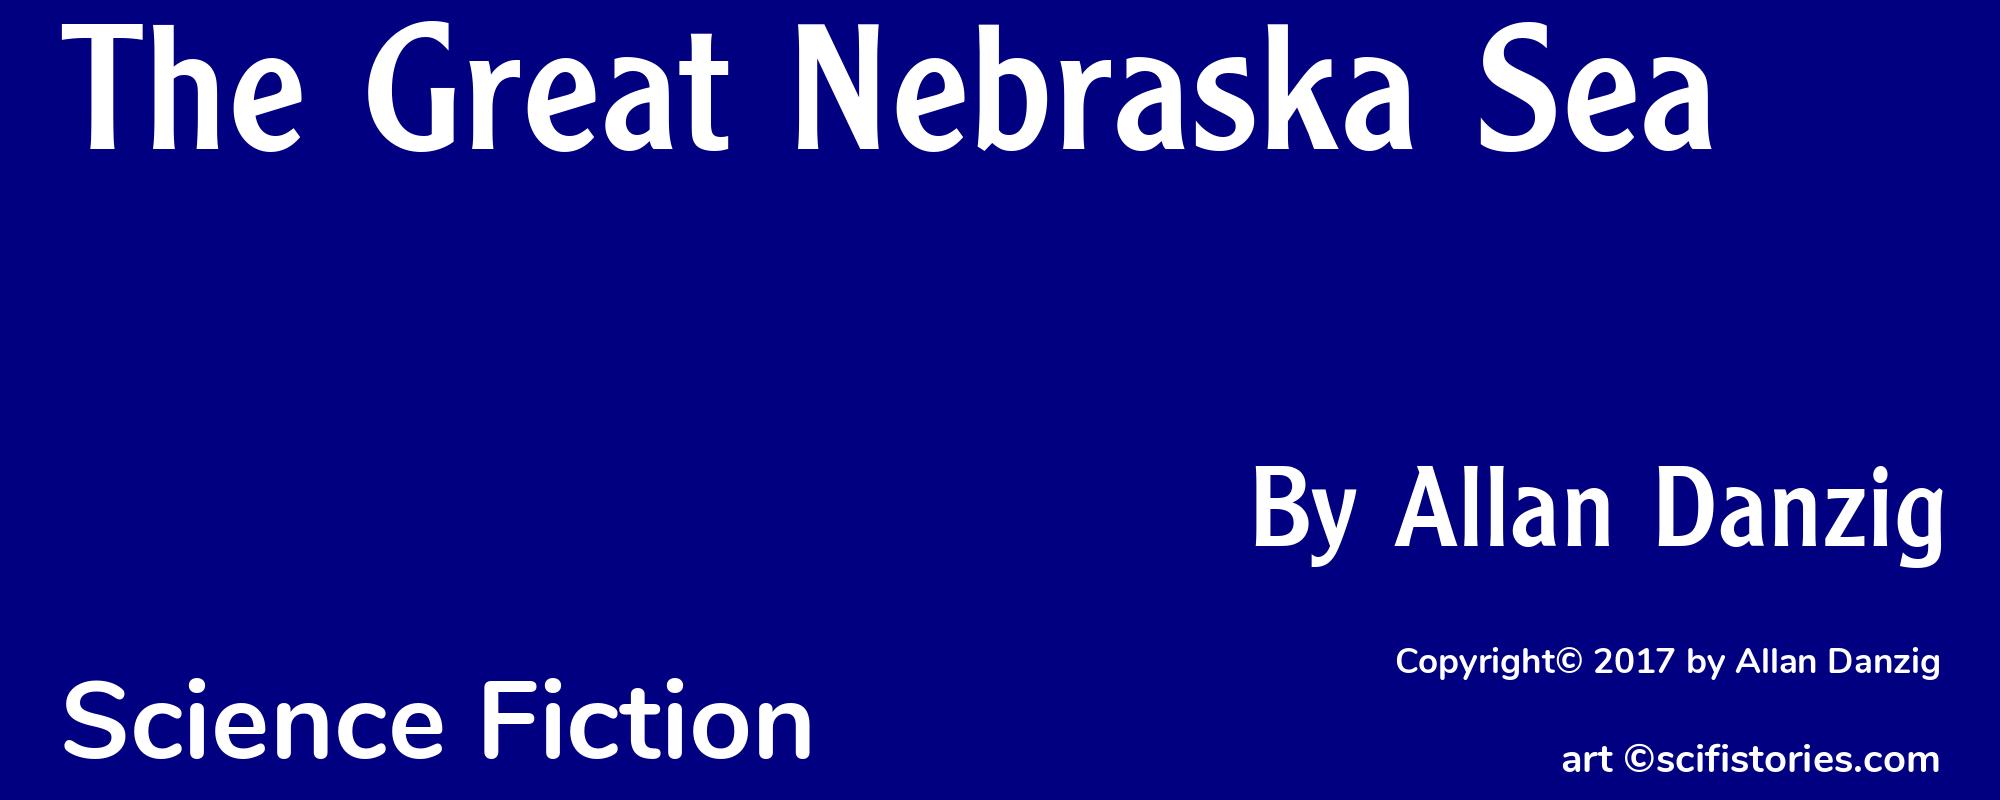 The Great Nebraska Sea - Cover